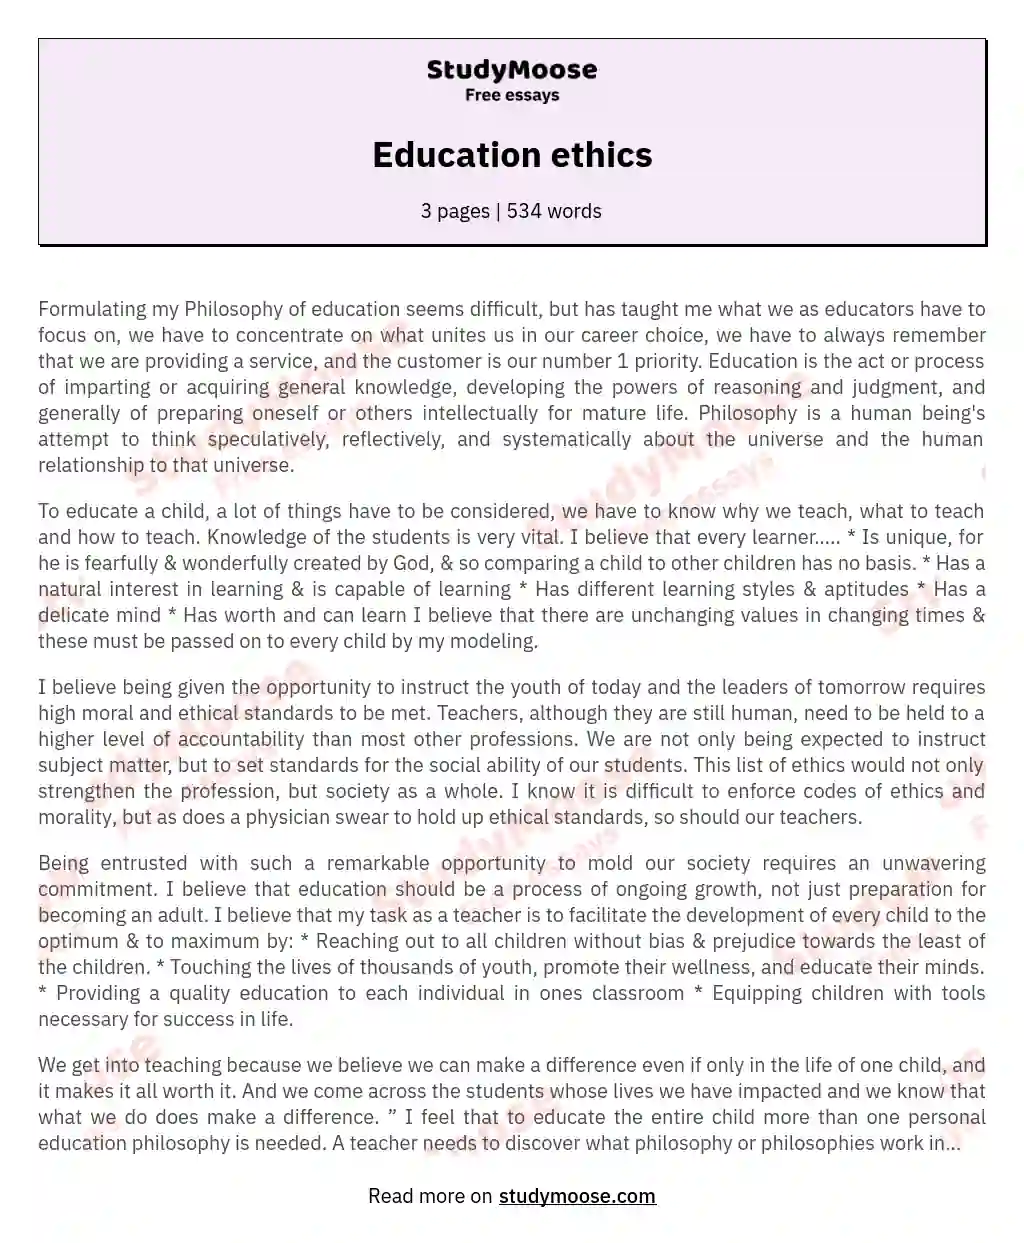 Education ethics